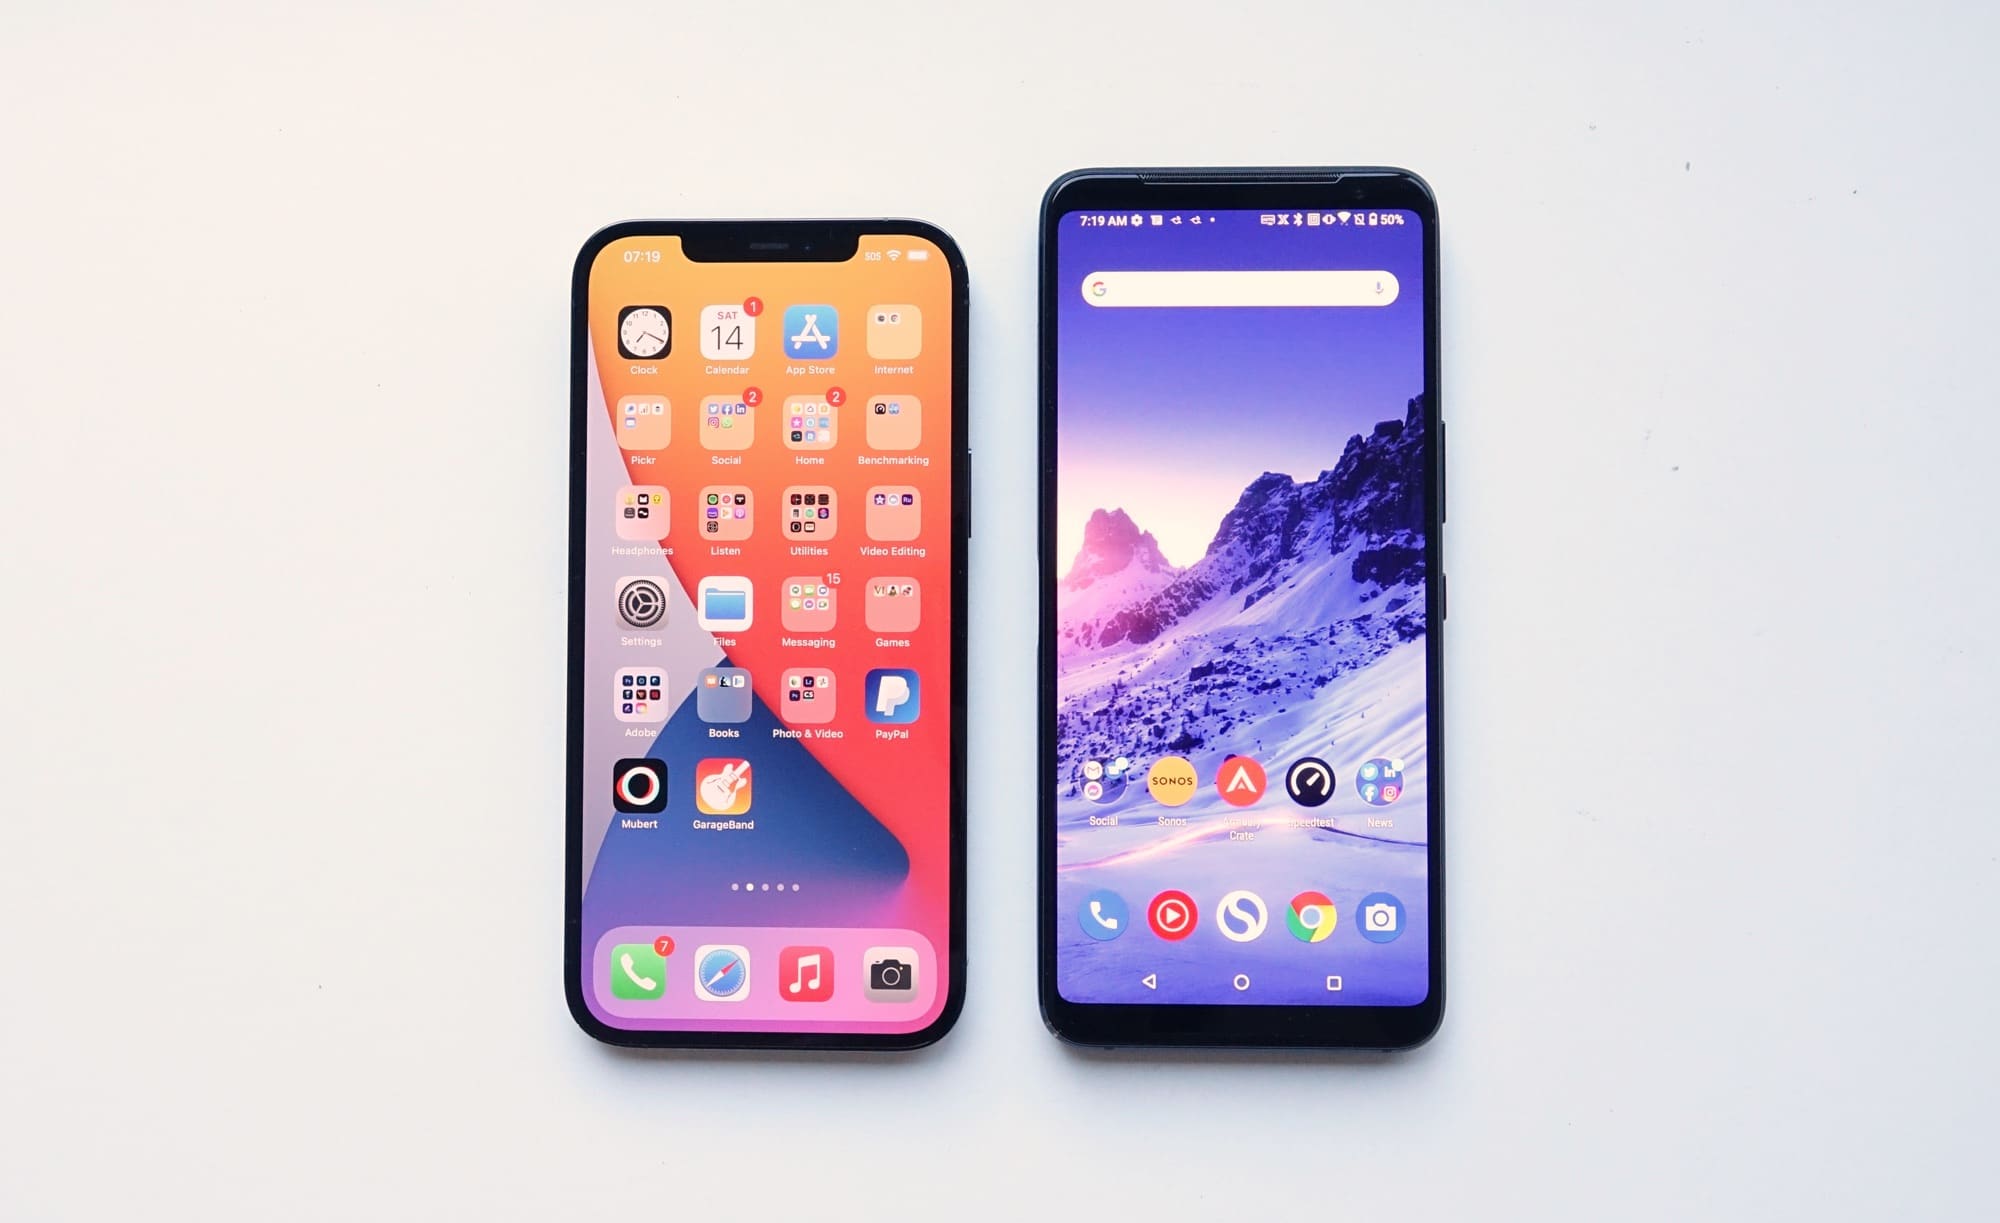 Big phones compared: Apple iPhone 12 Pro Max (left) vs Asus ROG Phone 3 (right)